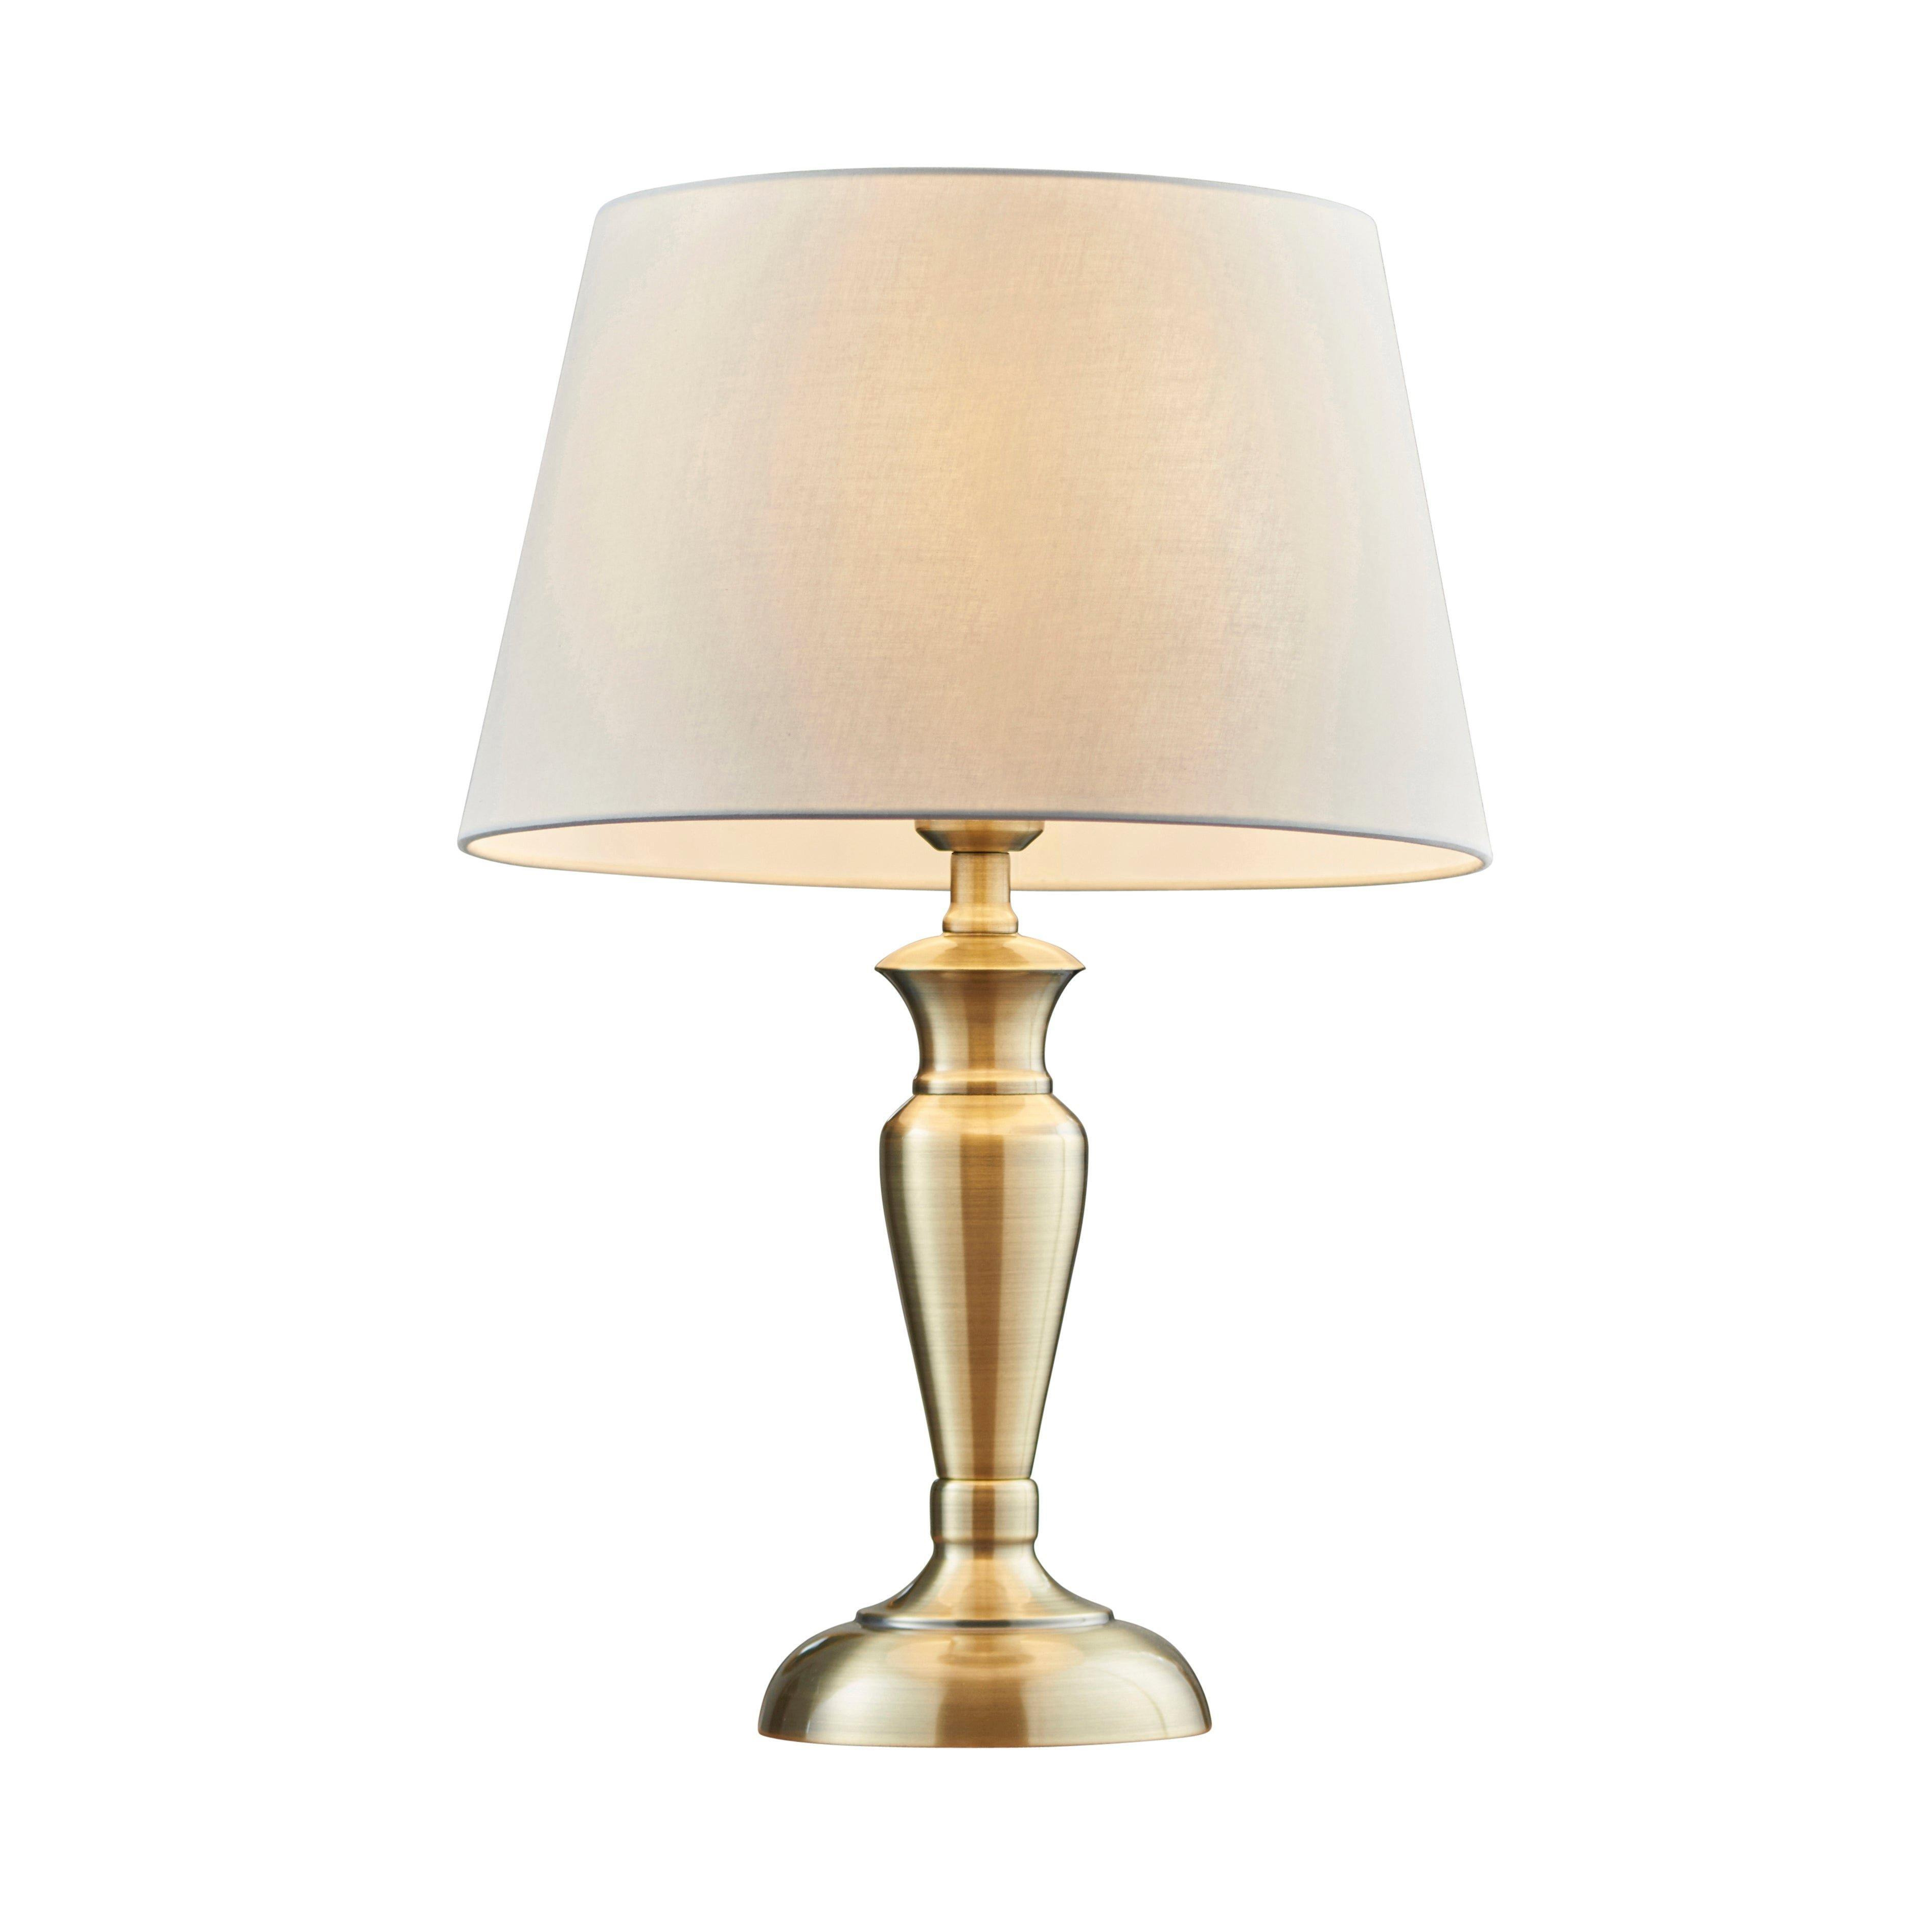 Table Lamp Antique Brass & Pale Grey Cotton 60W E27 Base & Shade e10518 - image 1